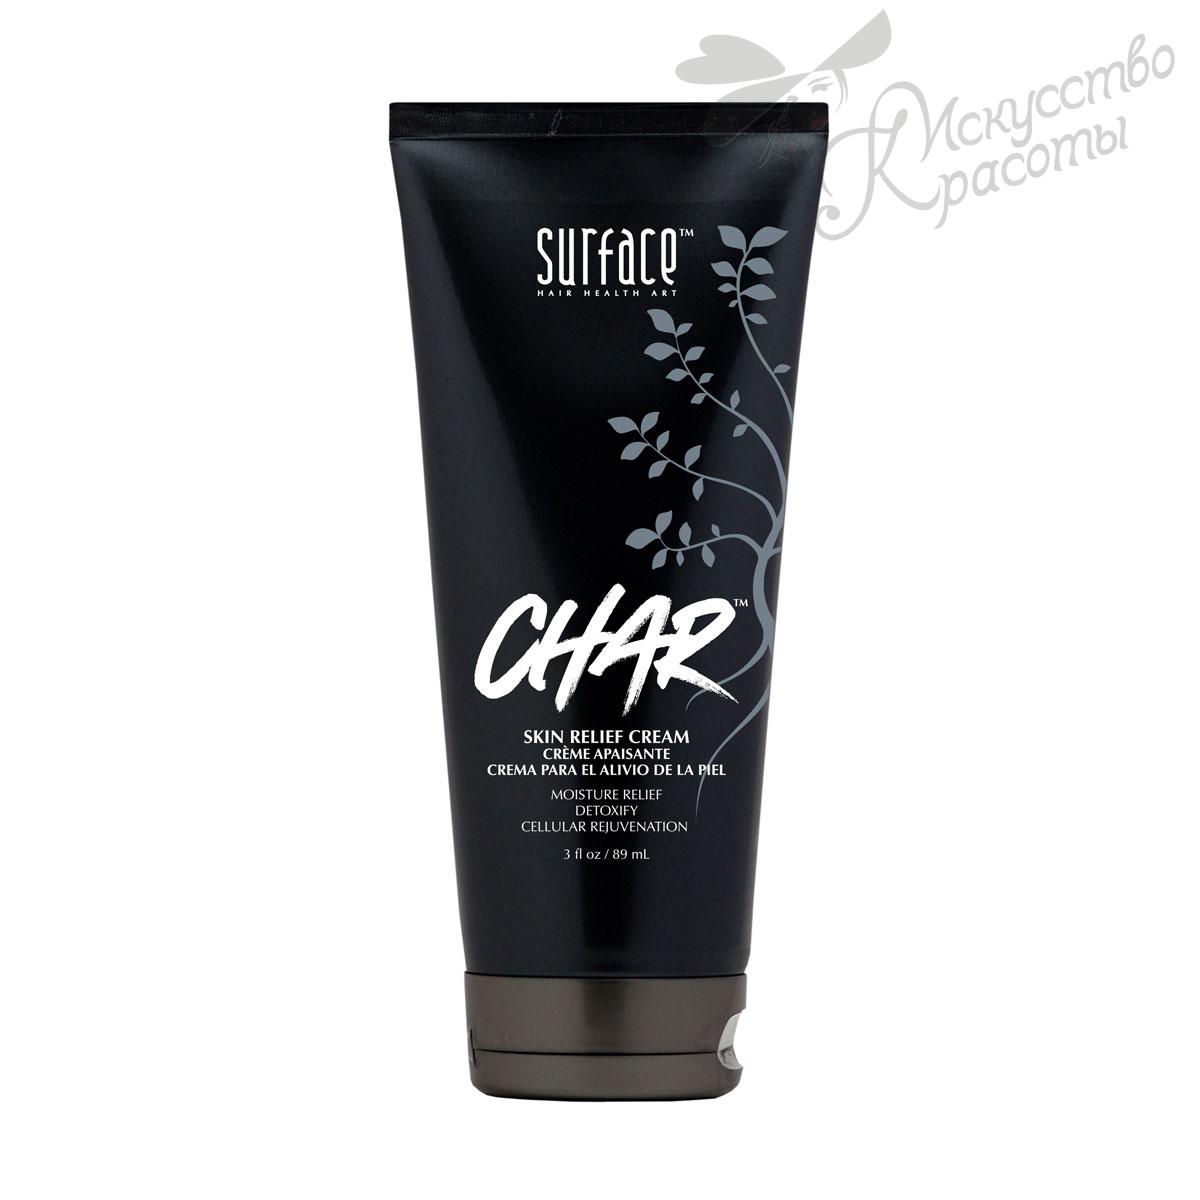 Surface 66006 Char Skin Relief Cream, 89 мл